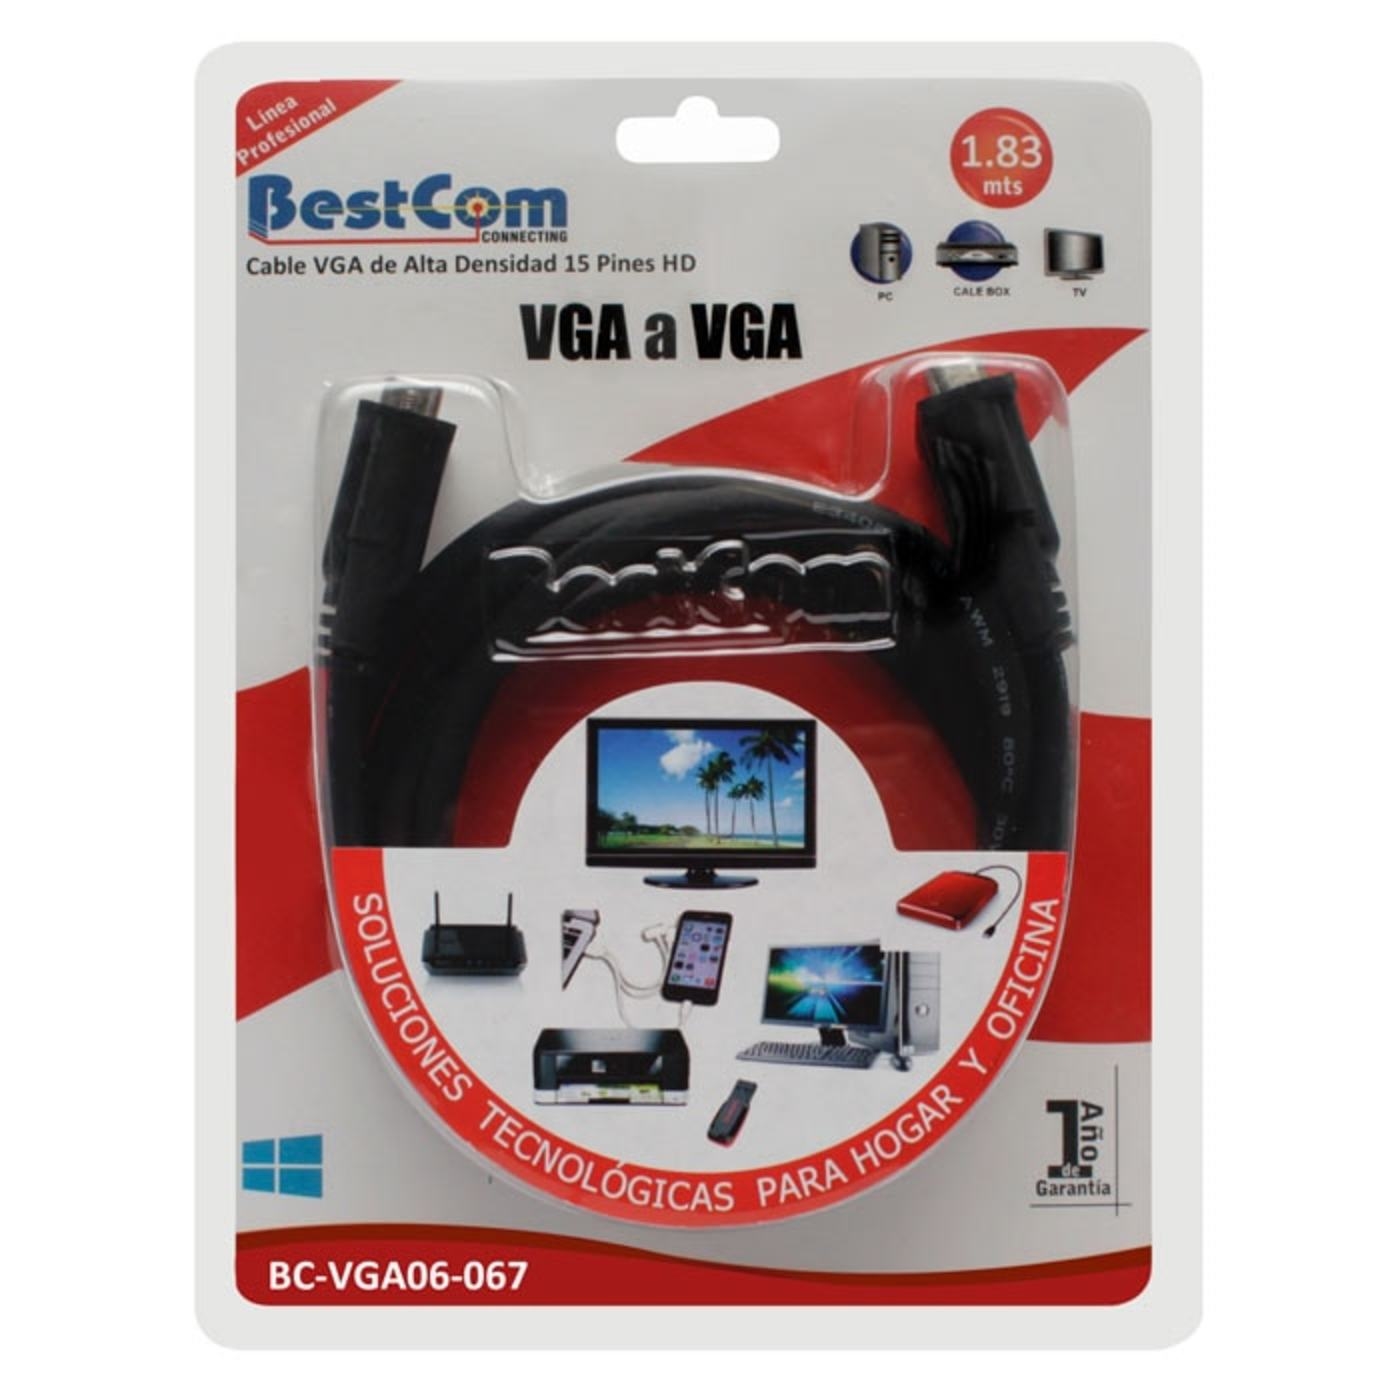 Cable BESTCOM VGA a VGA 15 Pines de 1.83 Metros